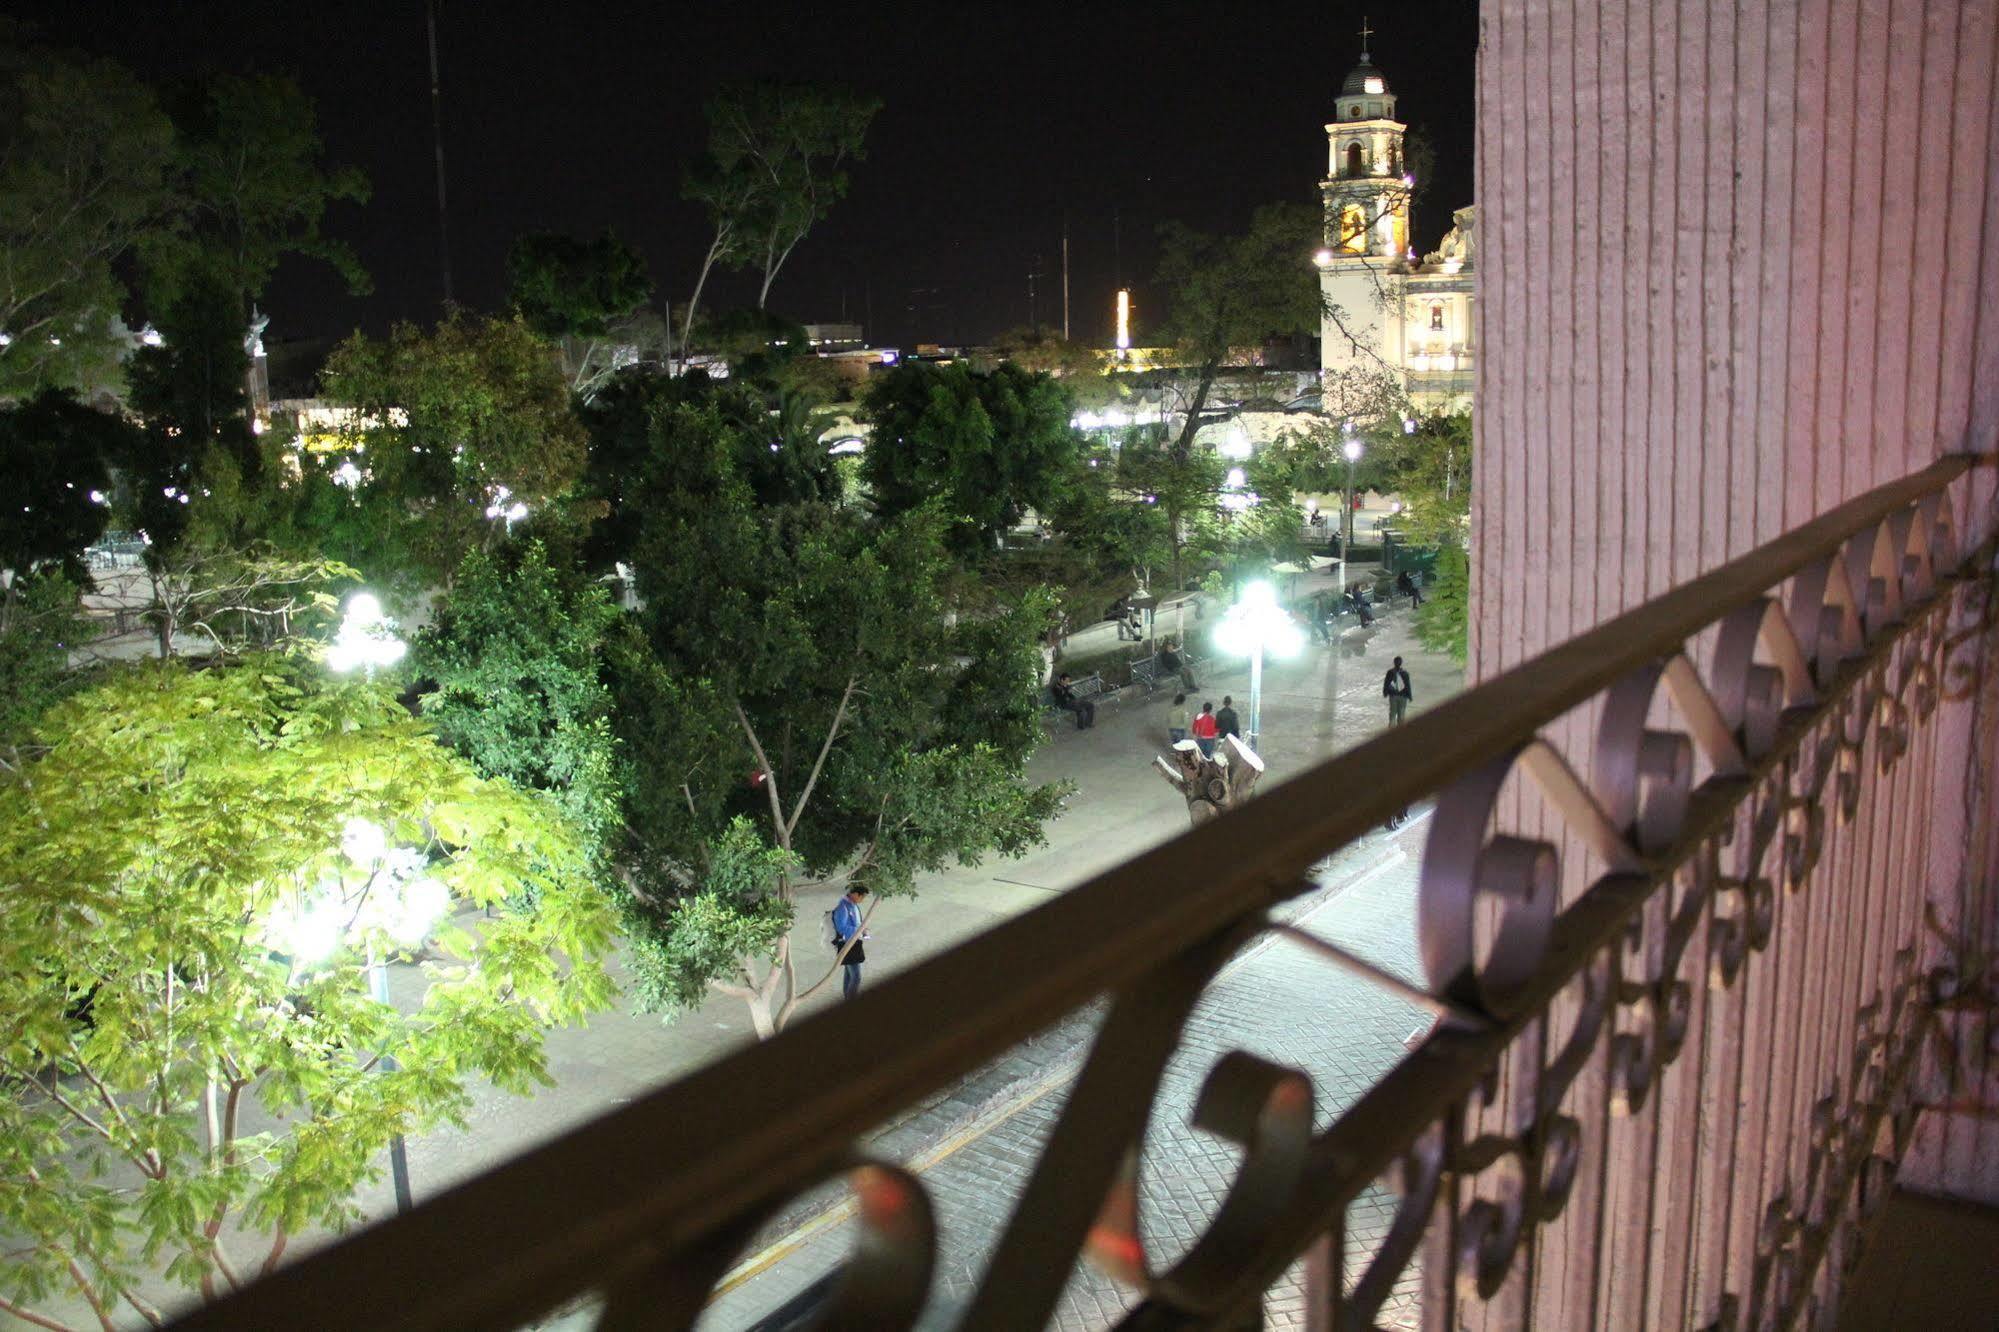 Hotel Tehuacan Plaza Exterior foto